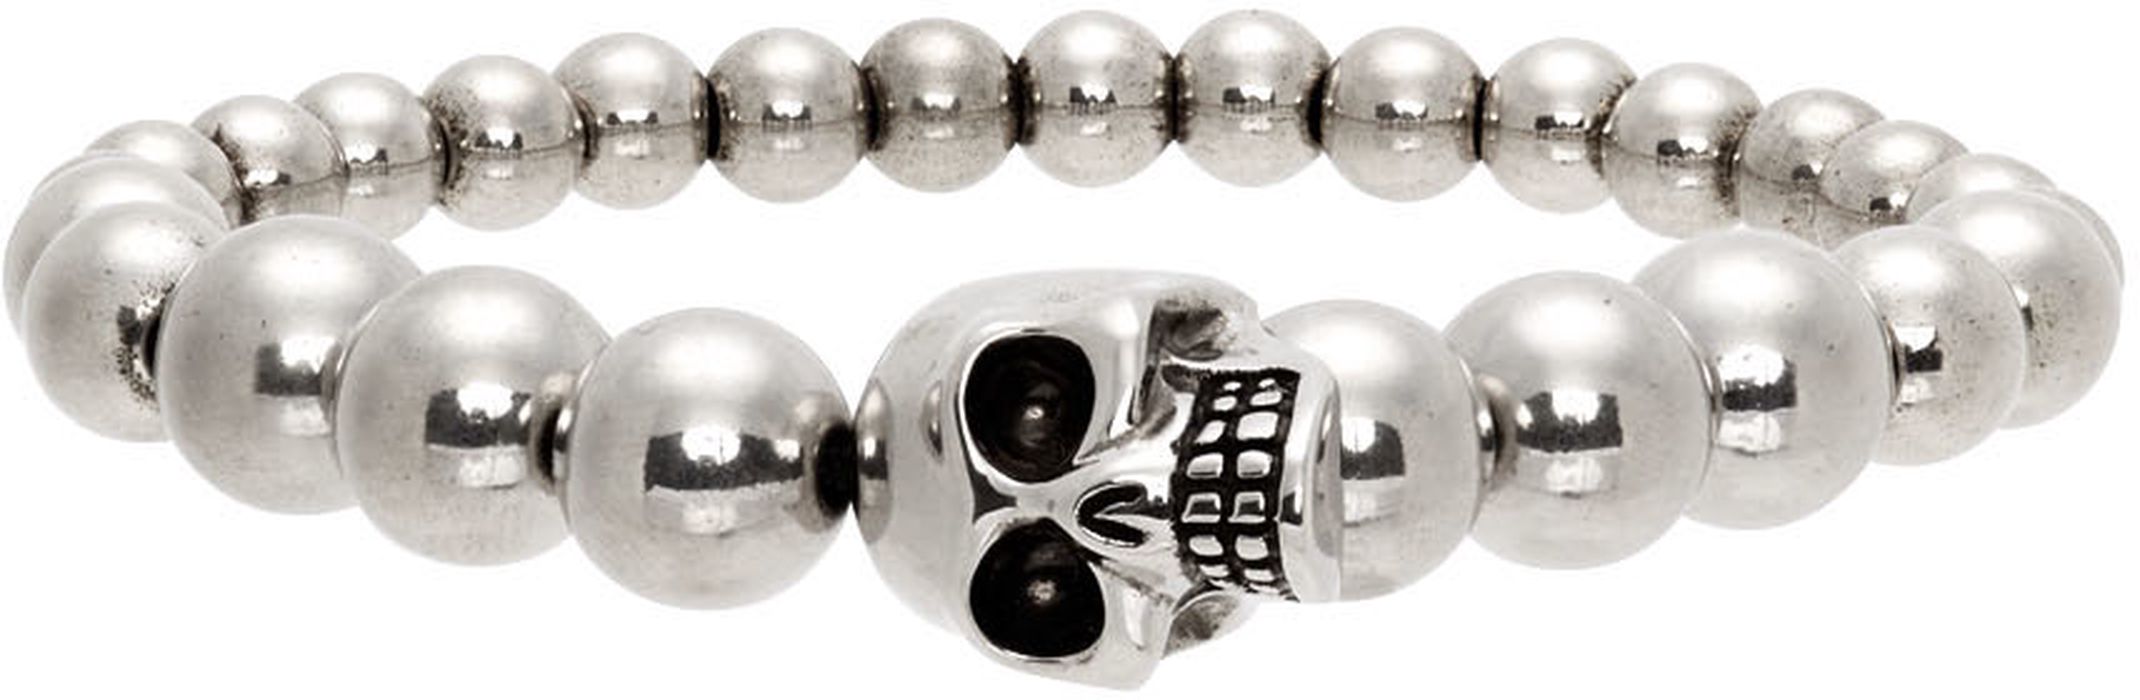 Alexander McQueen Silver Skull Ball Bracelet